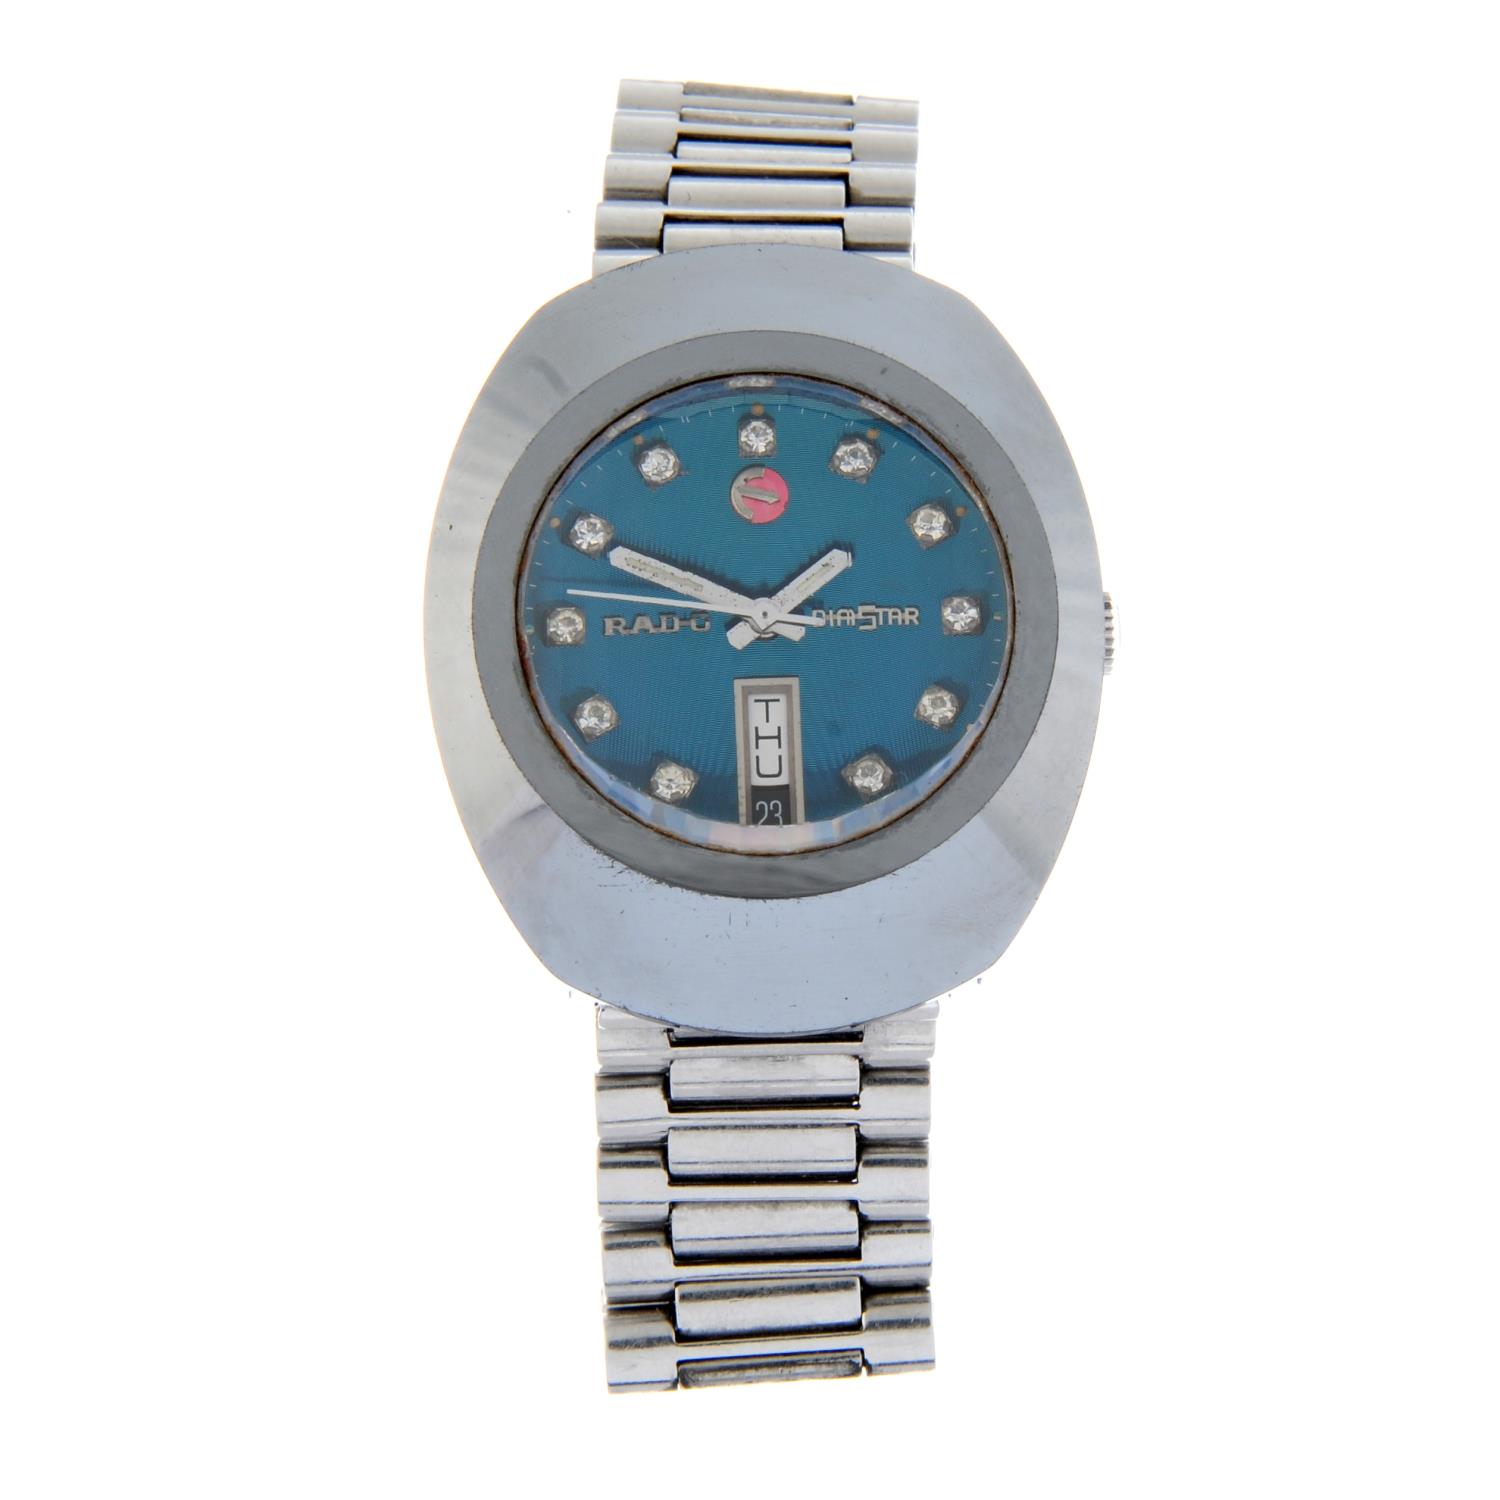 RADO - a DiaStar bracelet watch.